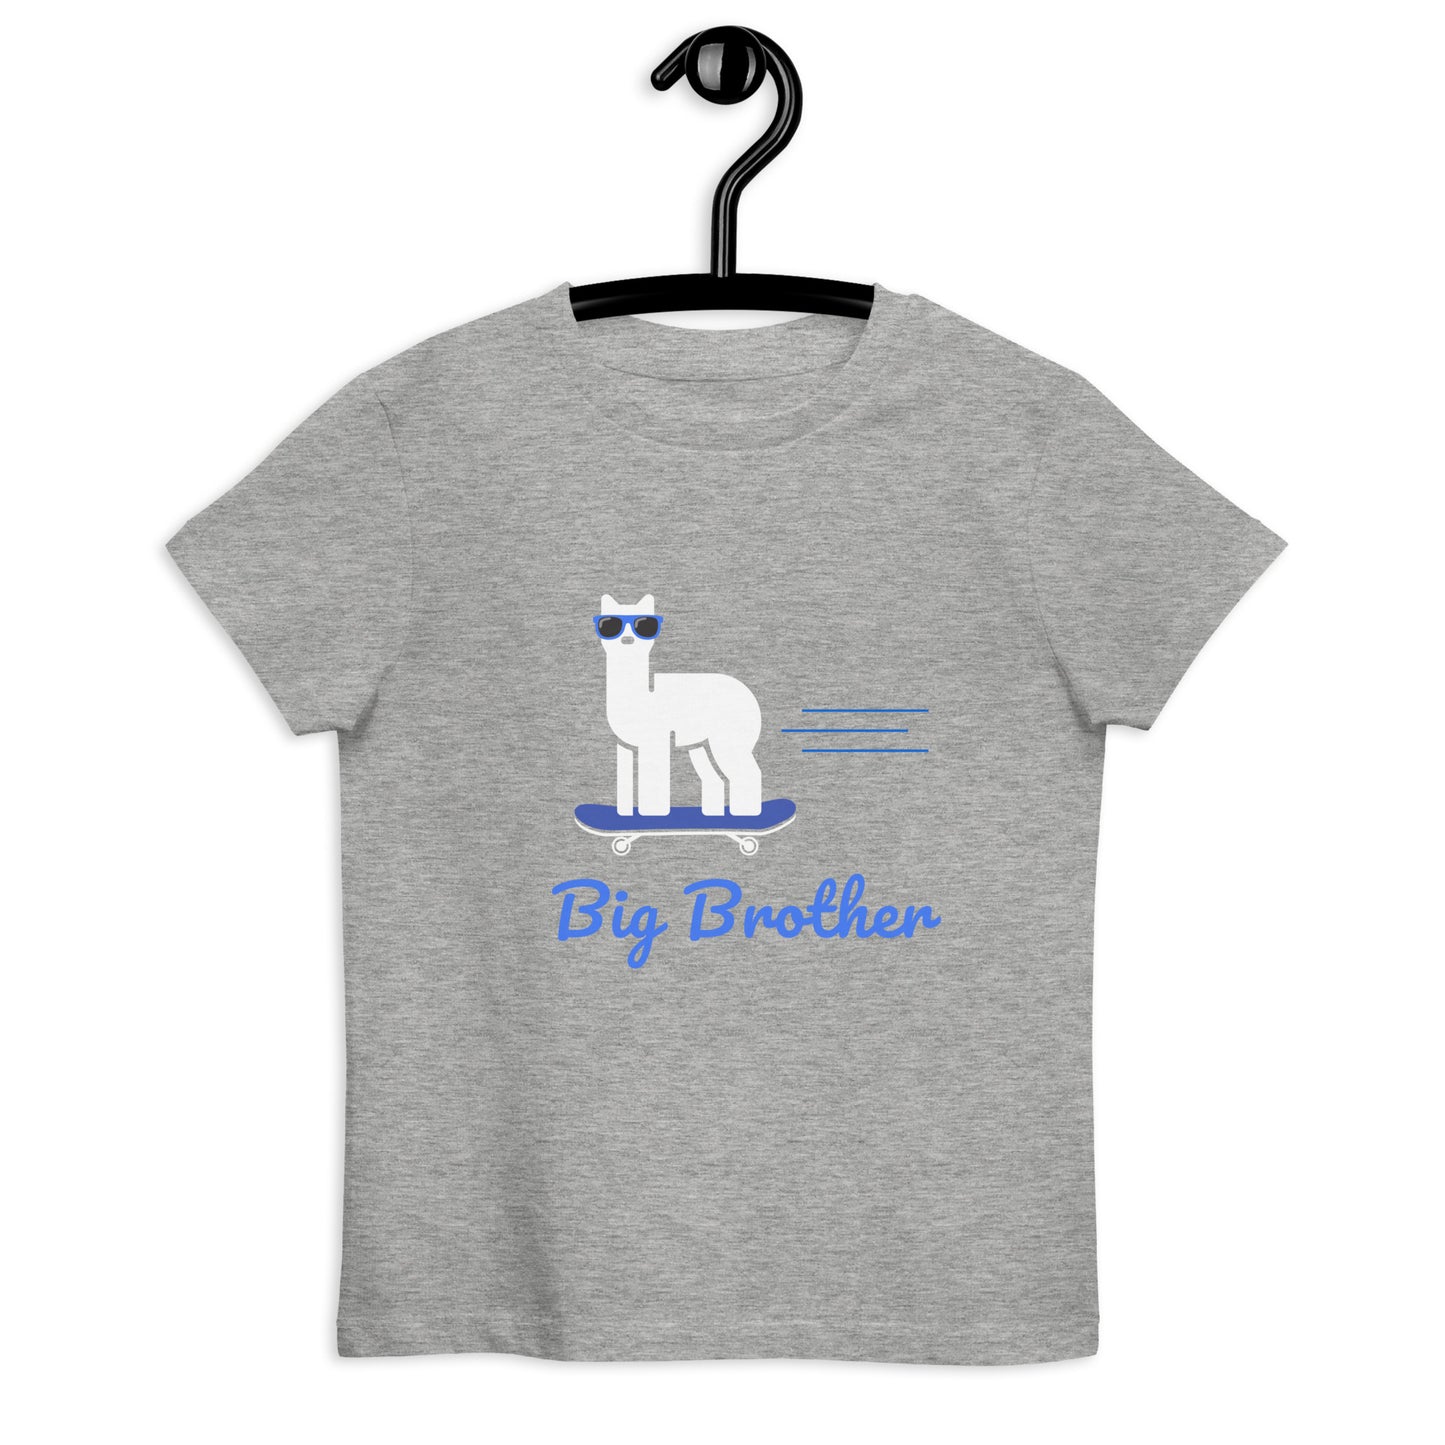 Big Brother Organic Cotton Kids T-shirt